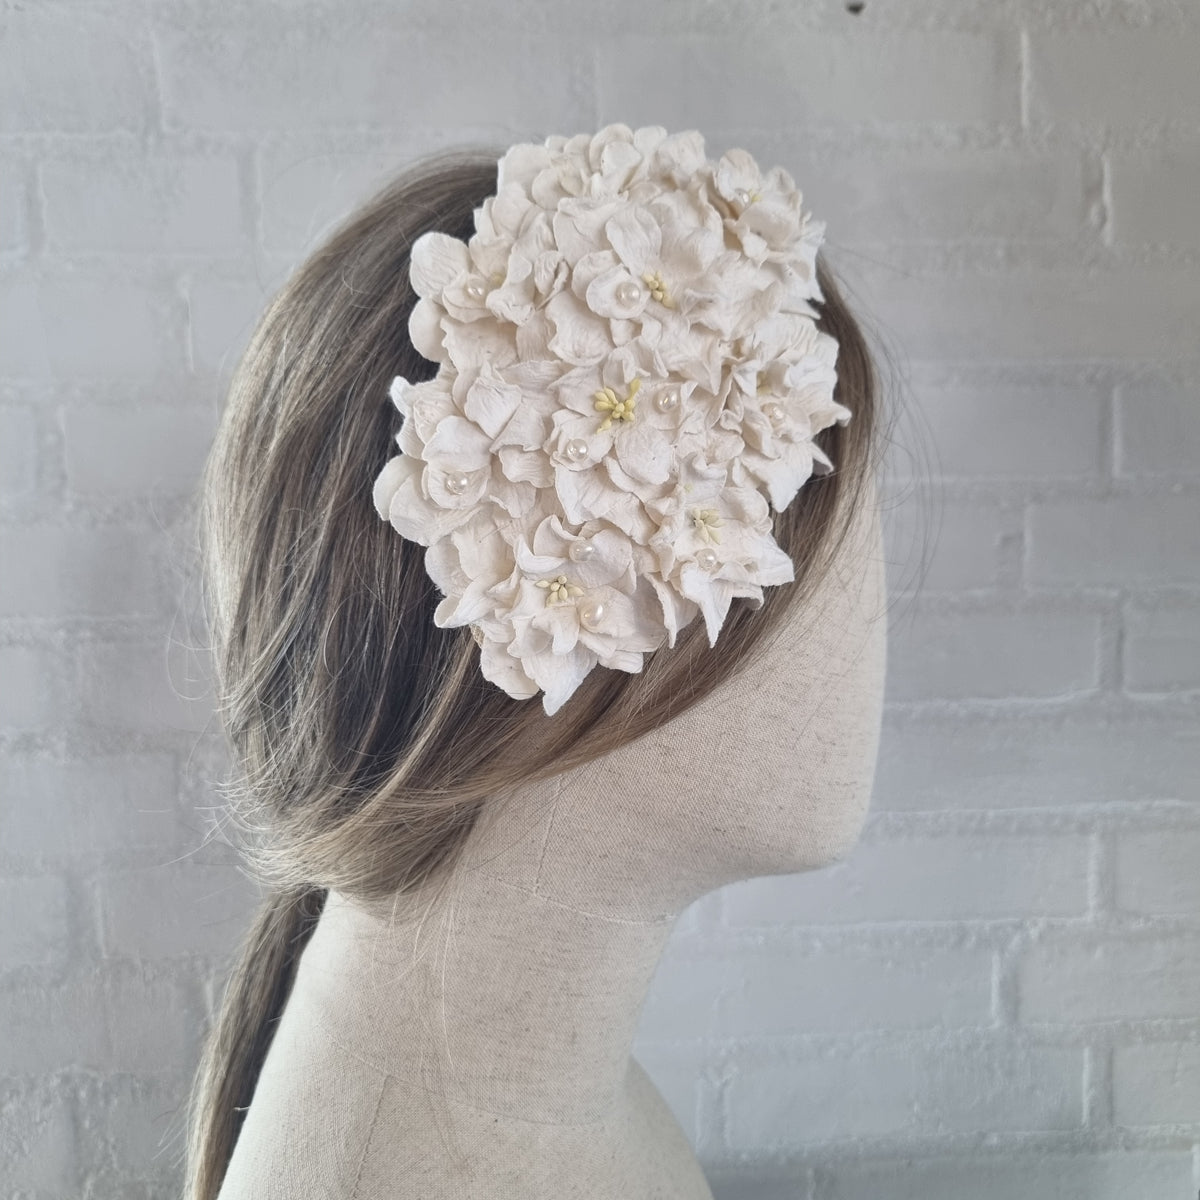 Fantastisk håndlavet fascinator med gardenia - Hårpynt med blomster og perler til bryllup, konfirmation og fest